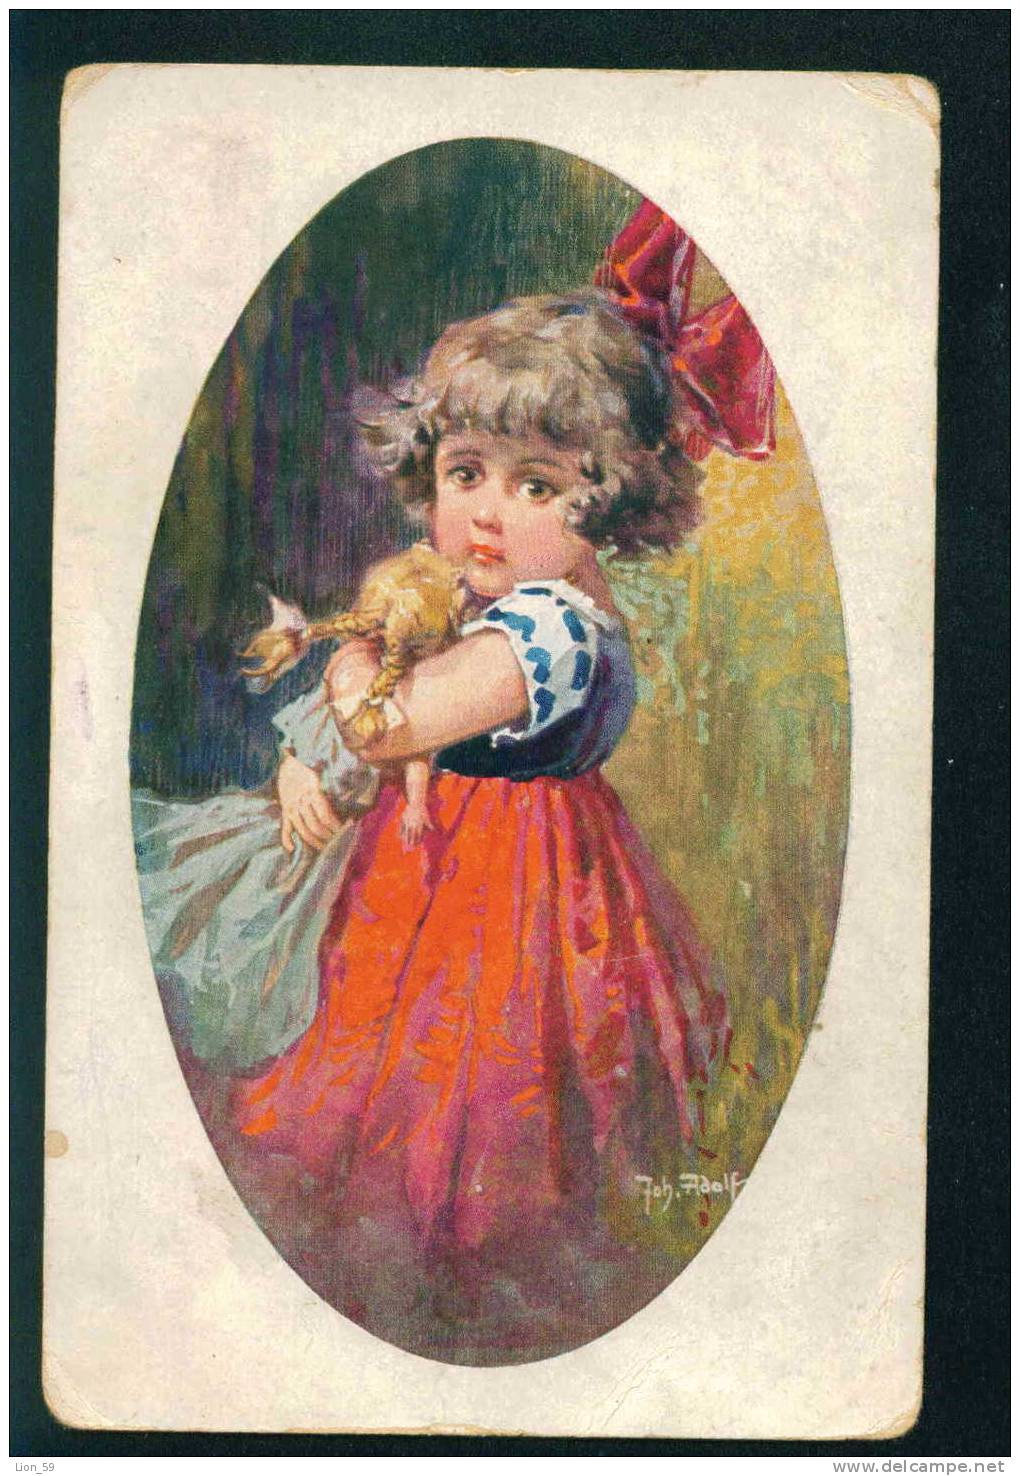 31853 Illustrator  Adolf  JODOLFI - YOUNG GIRL With DOLL  Pc Publisher:AKF Co ; BN Series - #  1047 - Adolf 'Jodolfi'